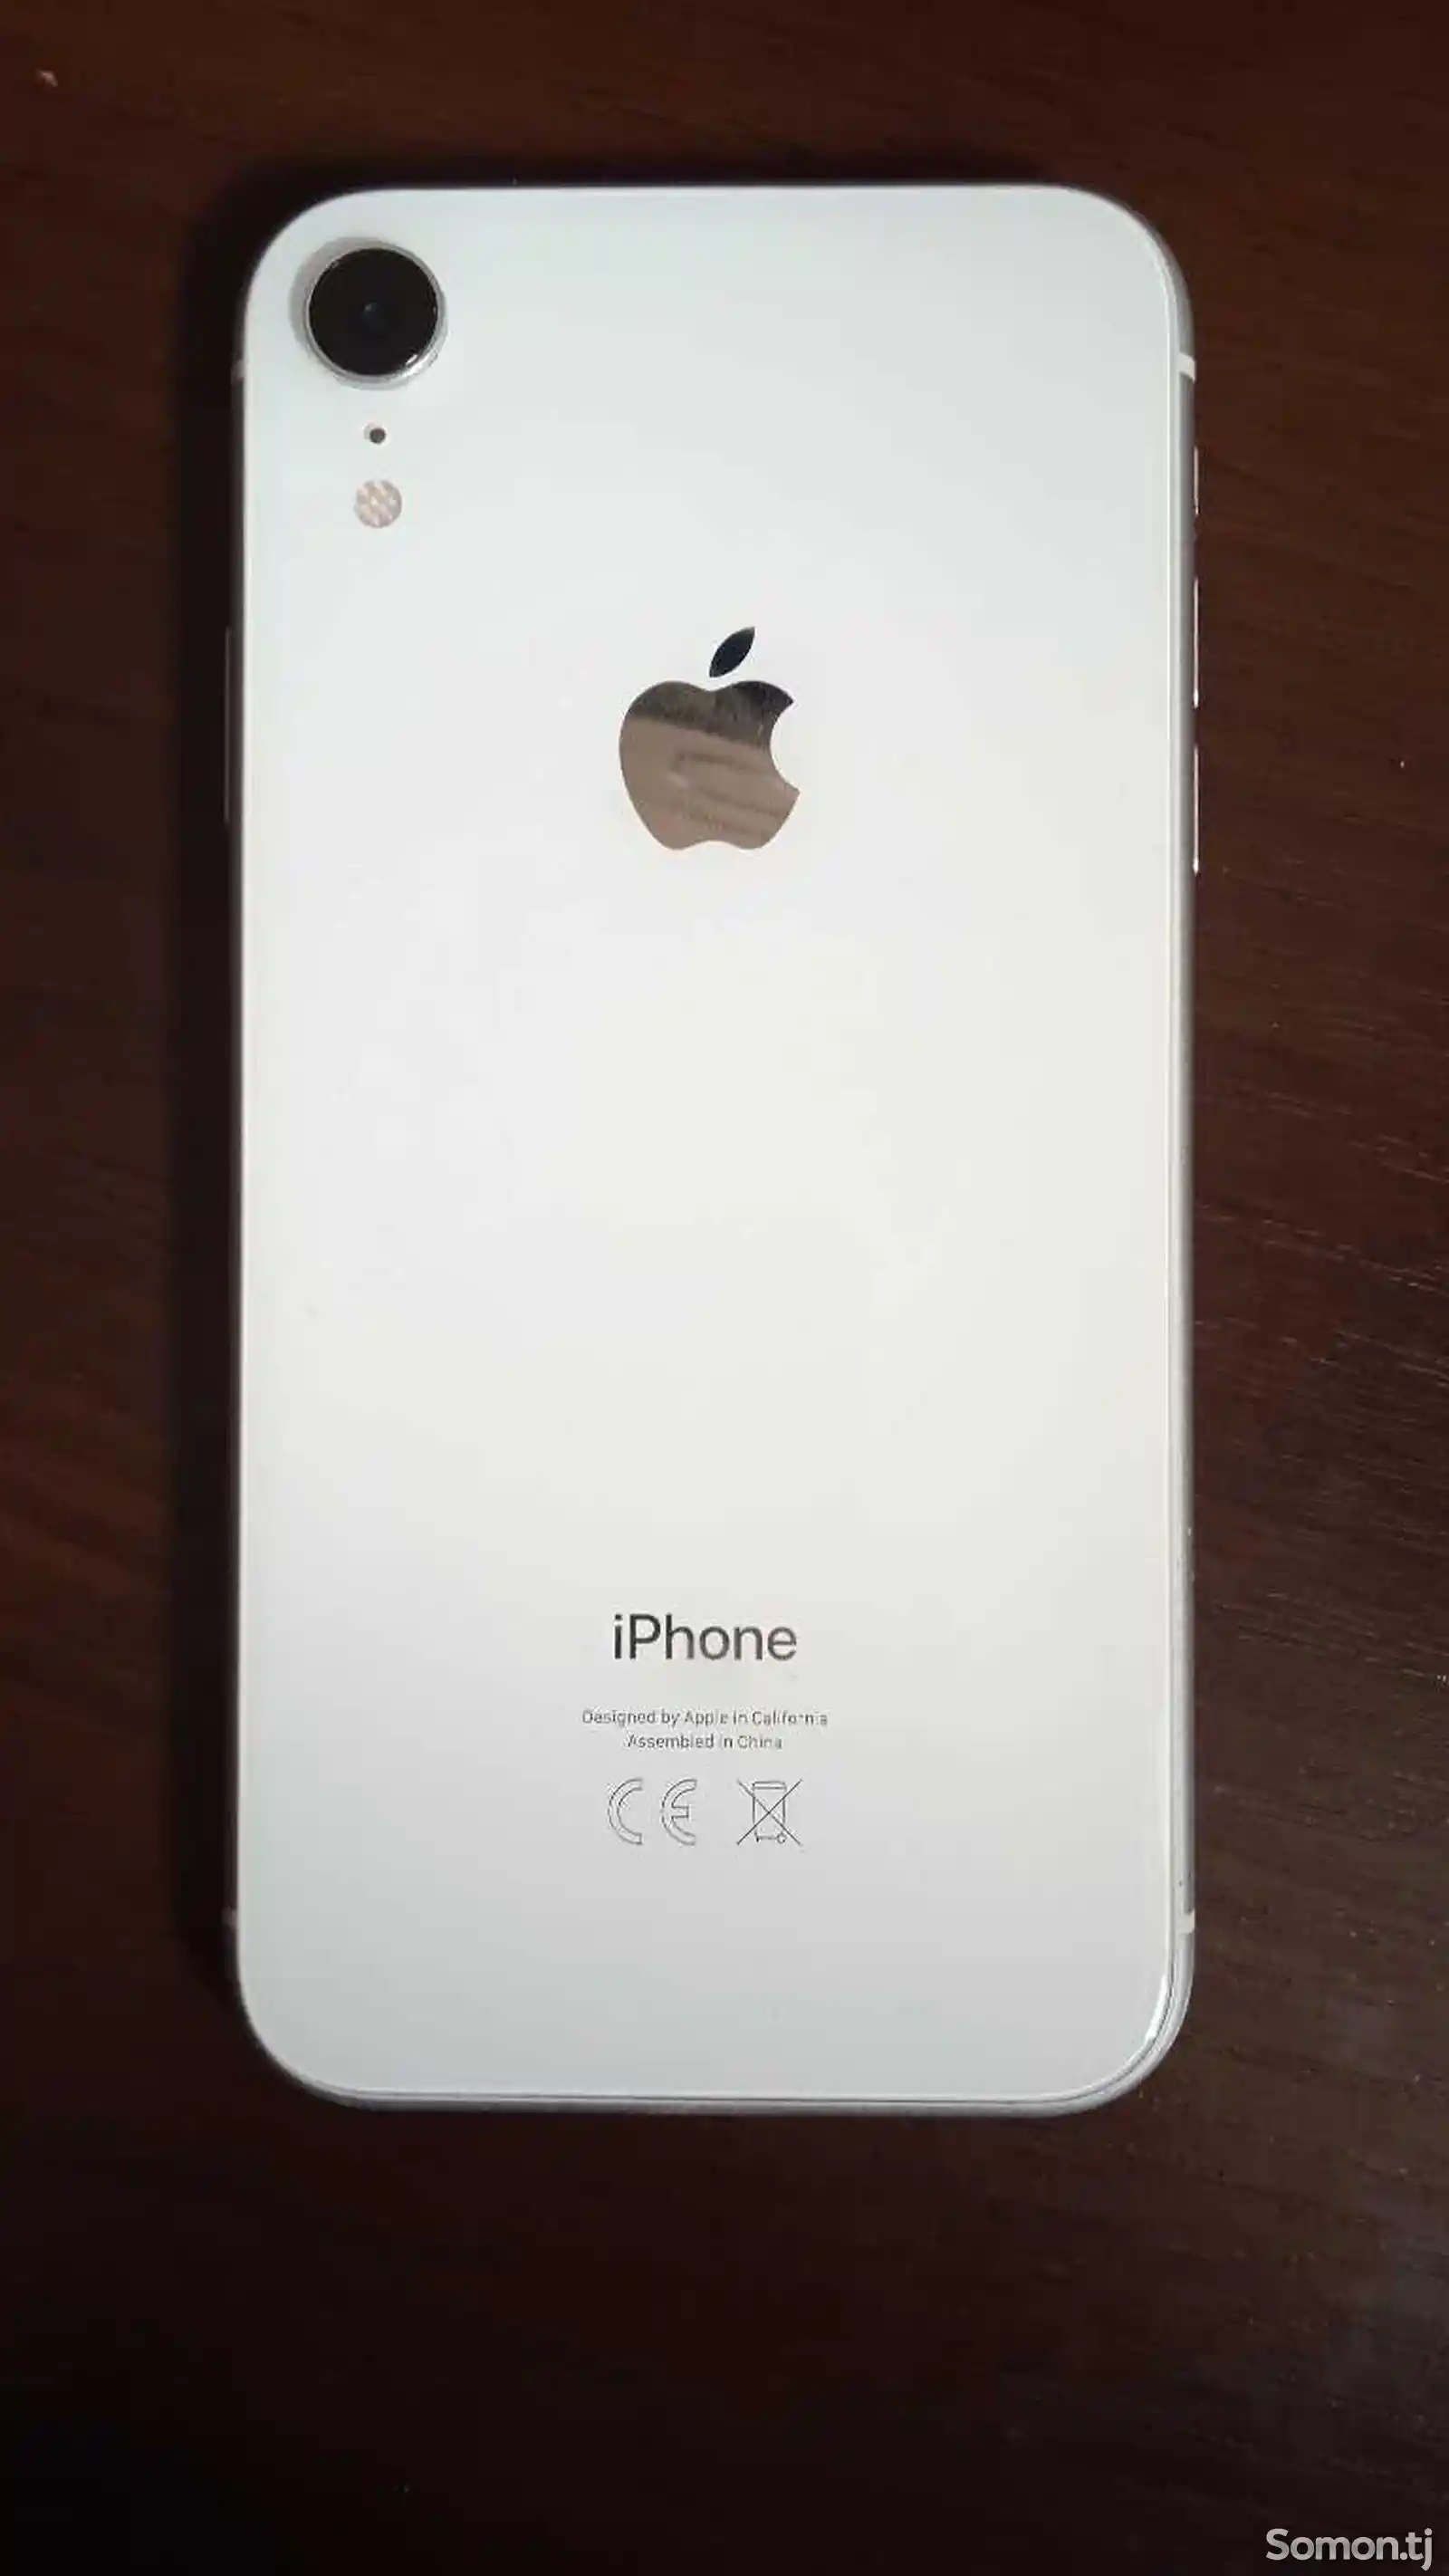 Apple iPhone Xr, 128 gb, Blue-1